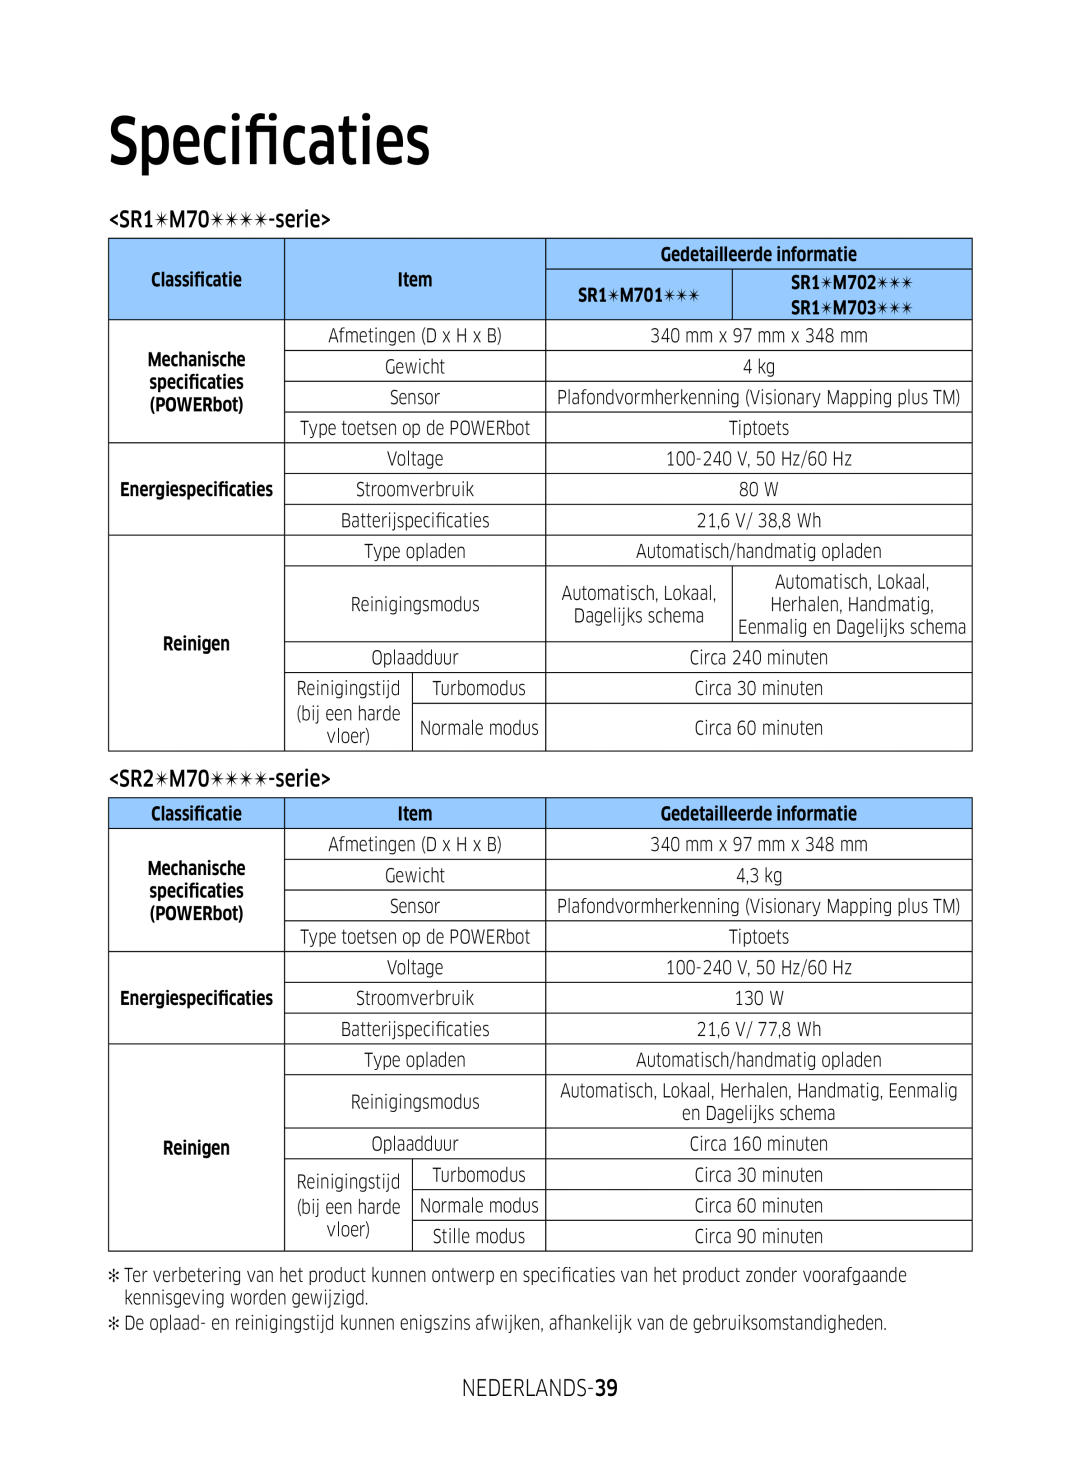 Samsung VR1GM7030WW/EG, VR1DM7020UH/EG, VR2GM7050UU/EG manual Specificaties, SR1M70-serie, SR2M70-serie, NEDERLANDS-39 